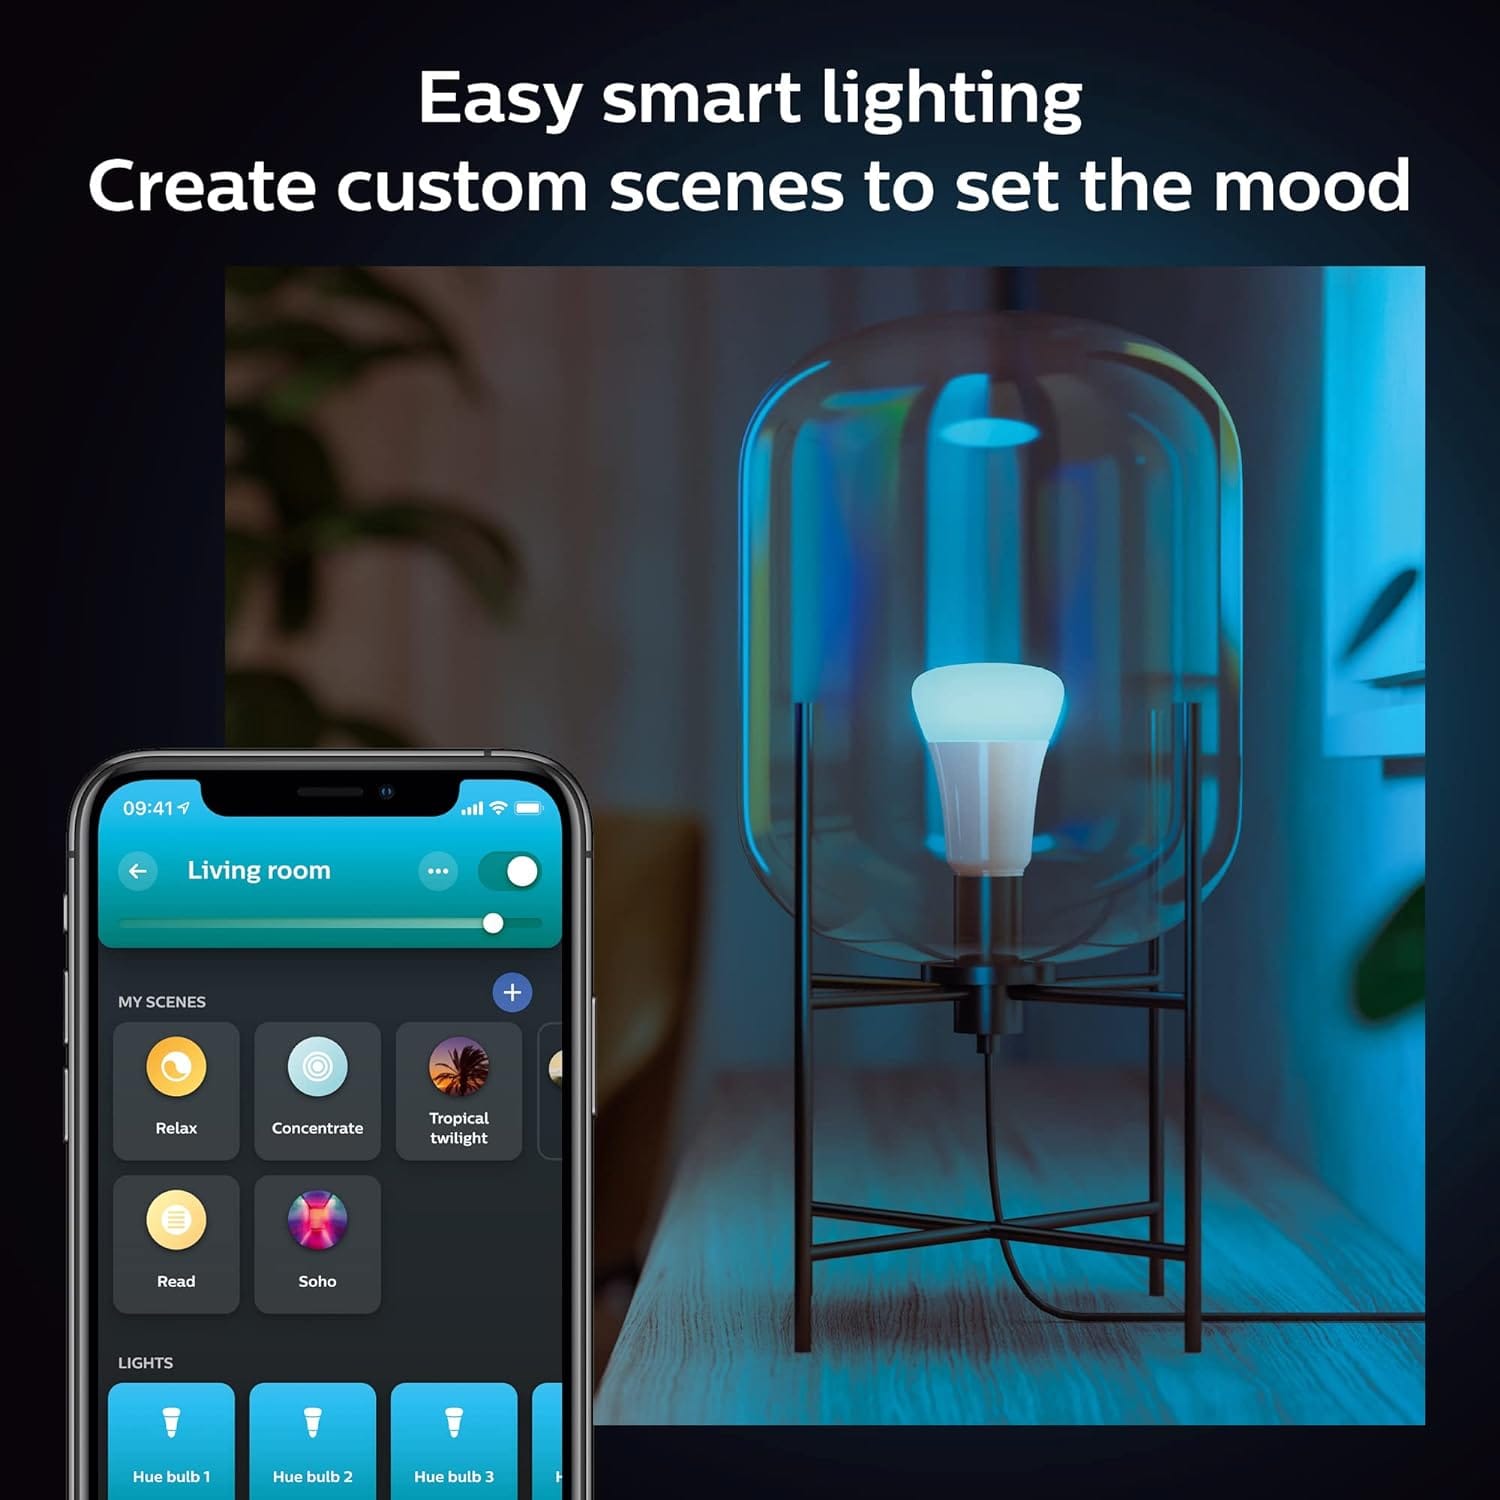 Philips A19 LED Smart Light Bulbs